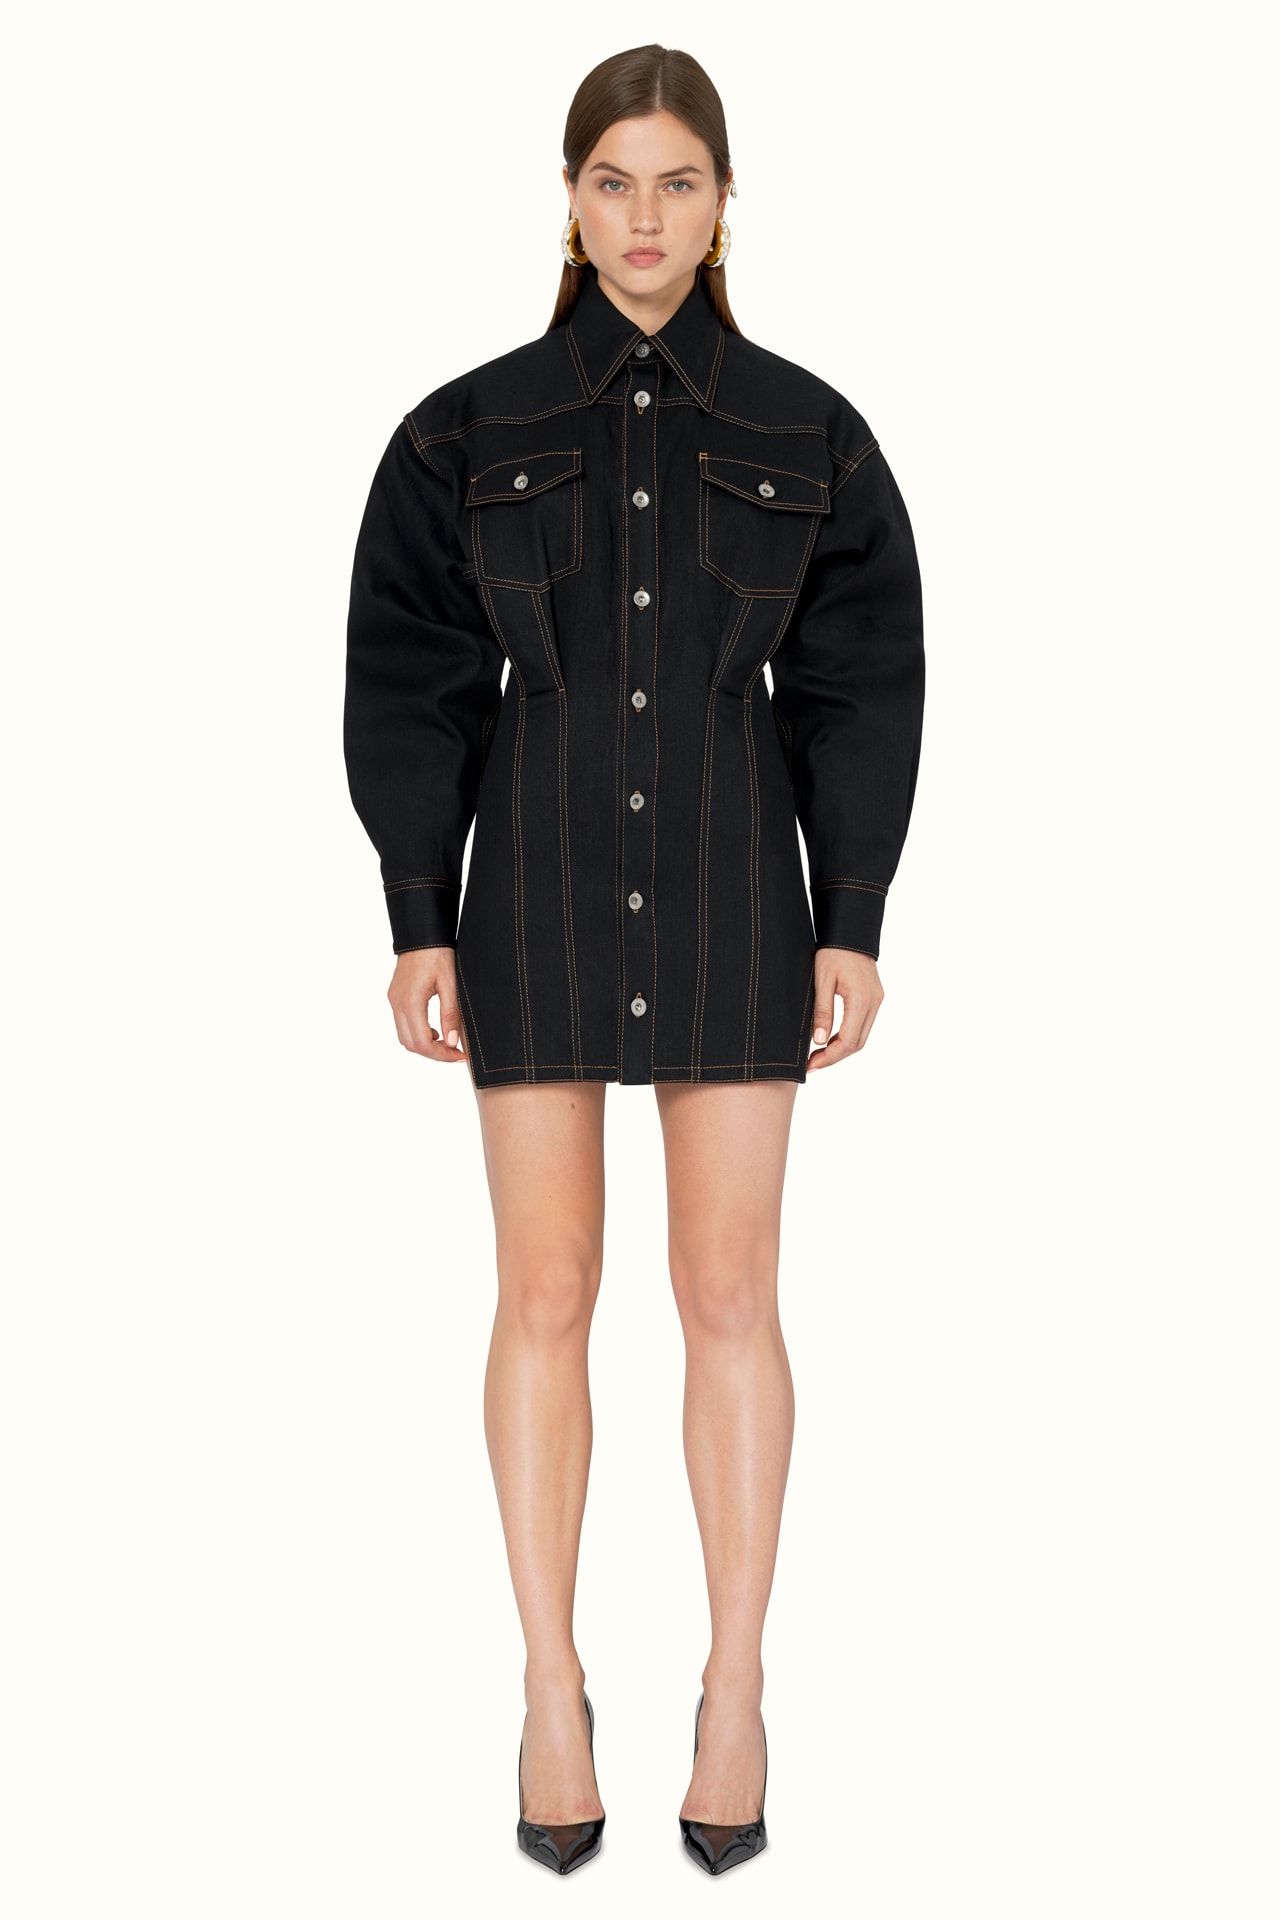 FENTY Rihanna Release 9-19 Collection Lookbook Shirt Dress Black